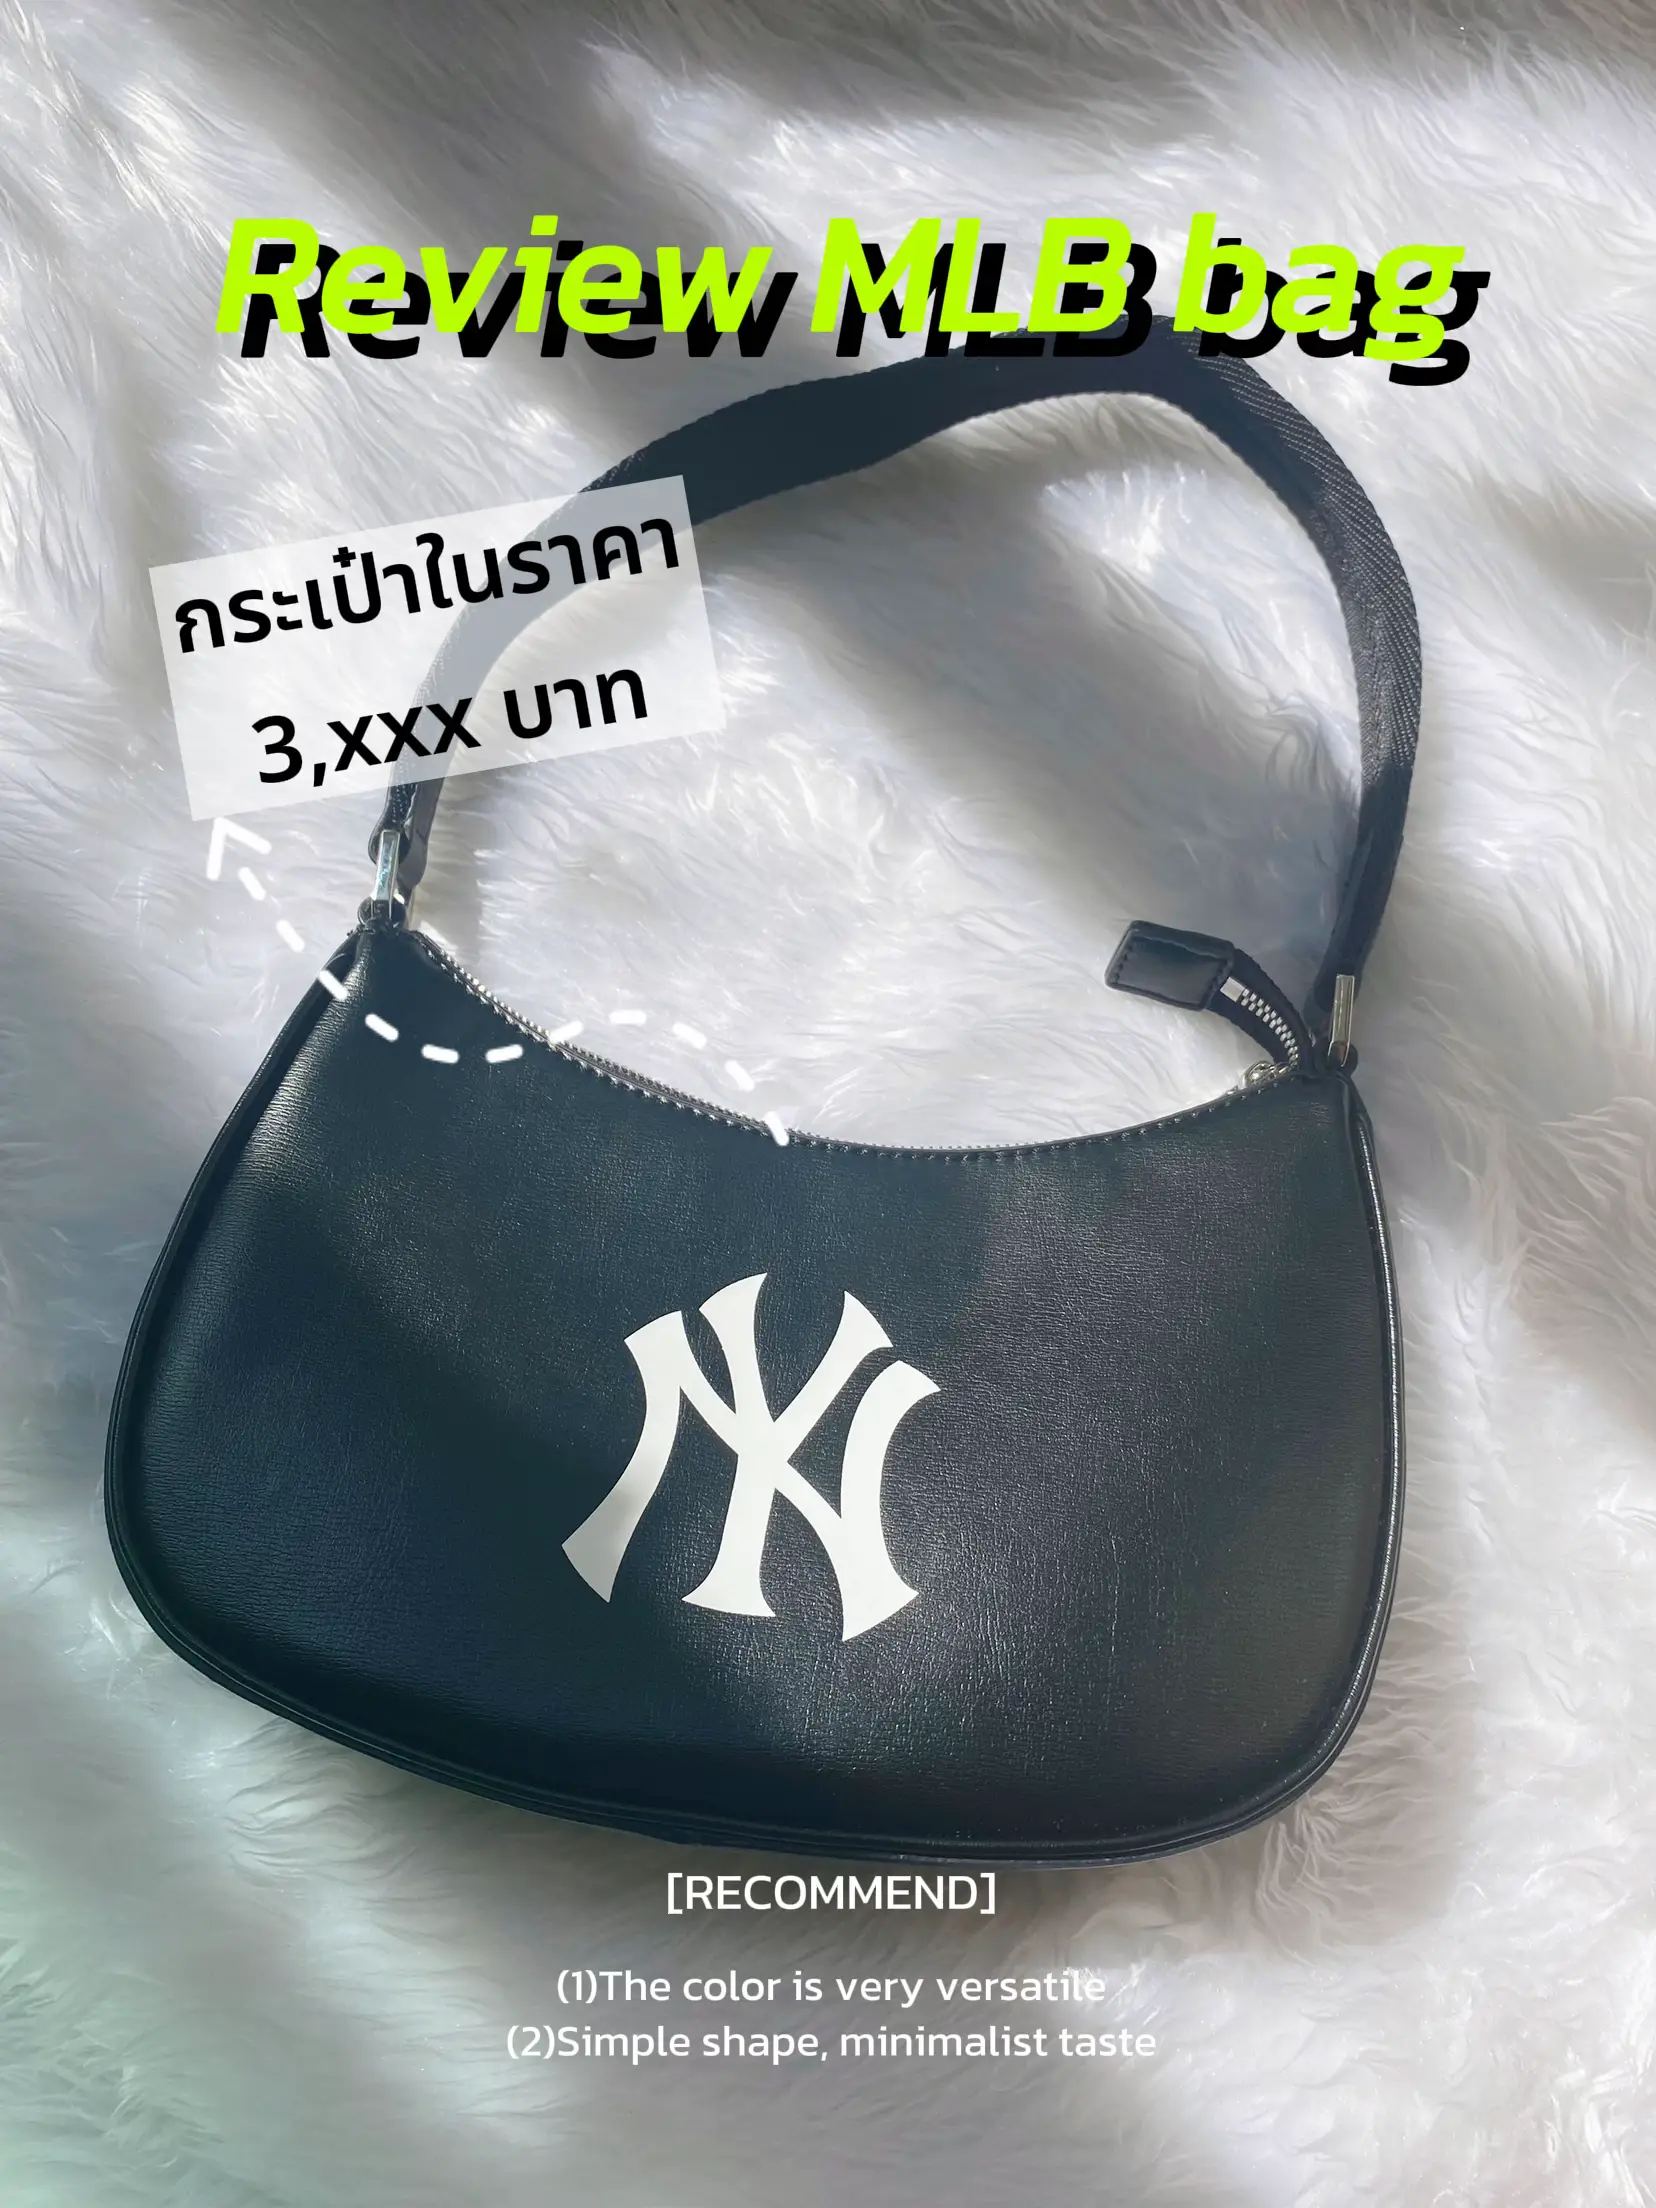 MLB Big Classic Monogram Jacquard New York Yankees Hobo Bag Hand Shoulder  Bag